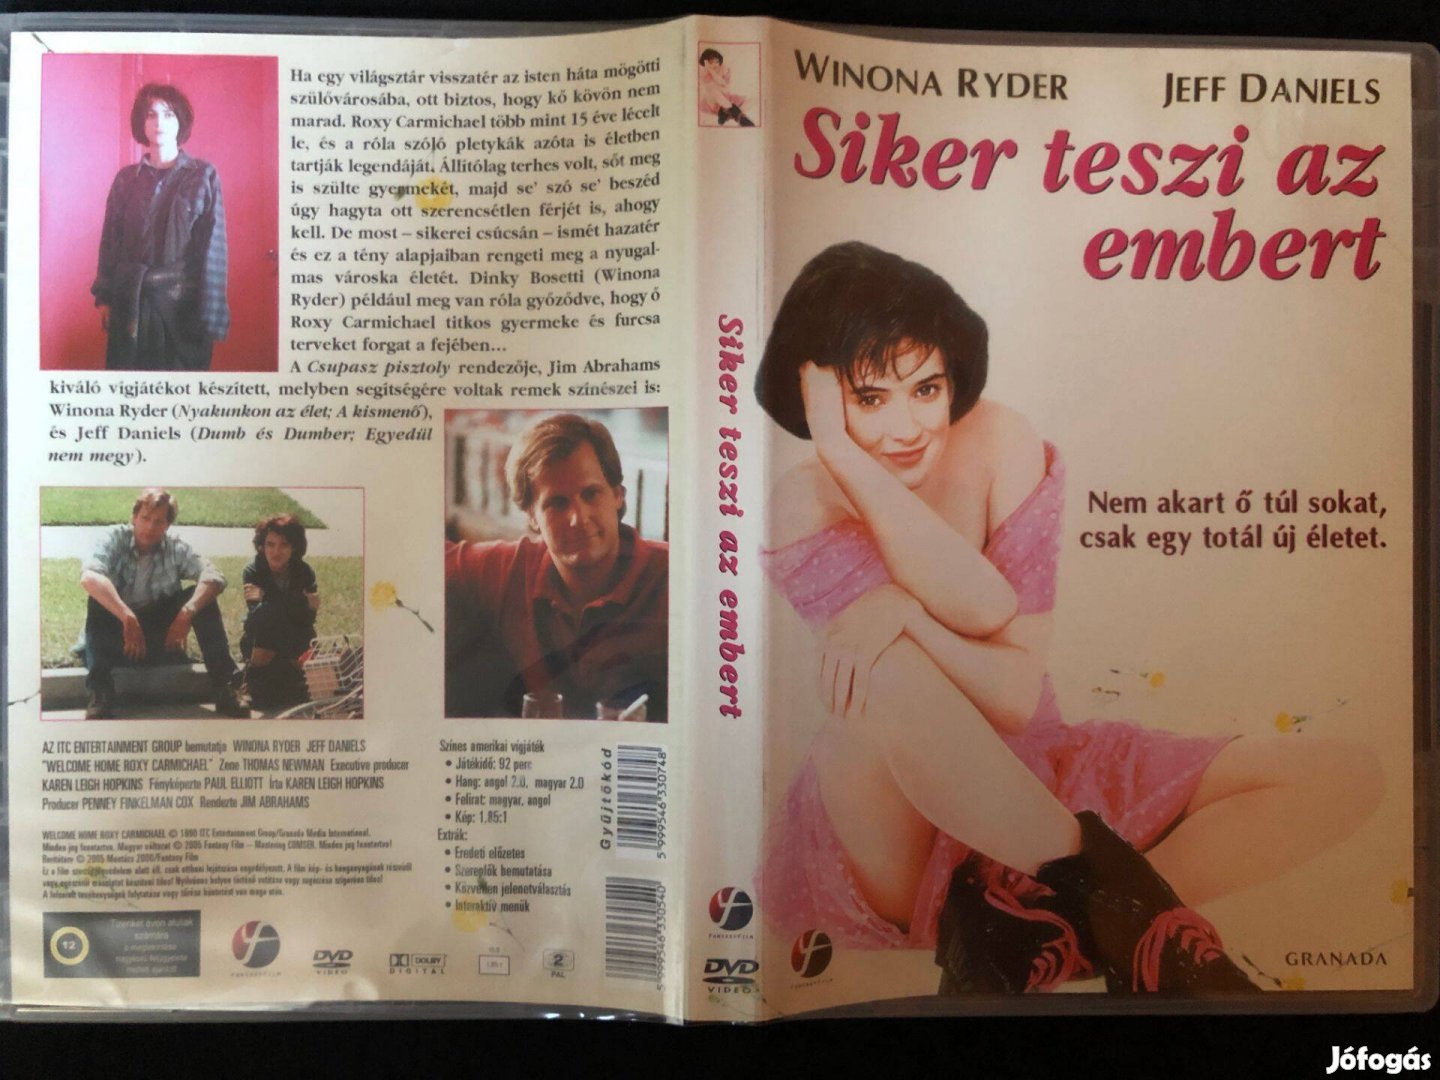 Siker teszi az embert DVD (karcmentes, Winona Ryder, Jeff Daniels)